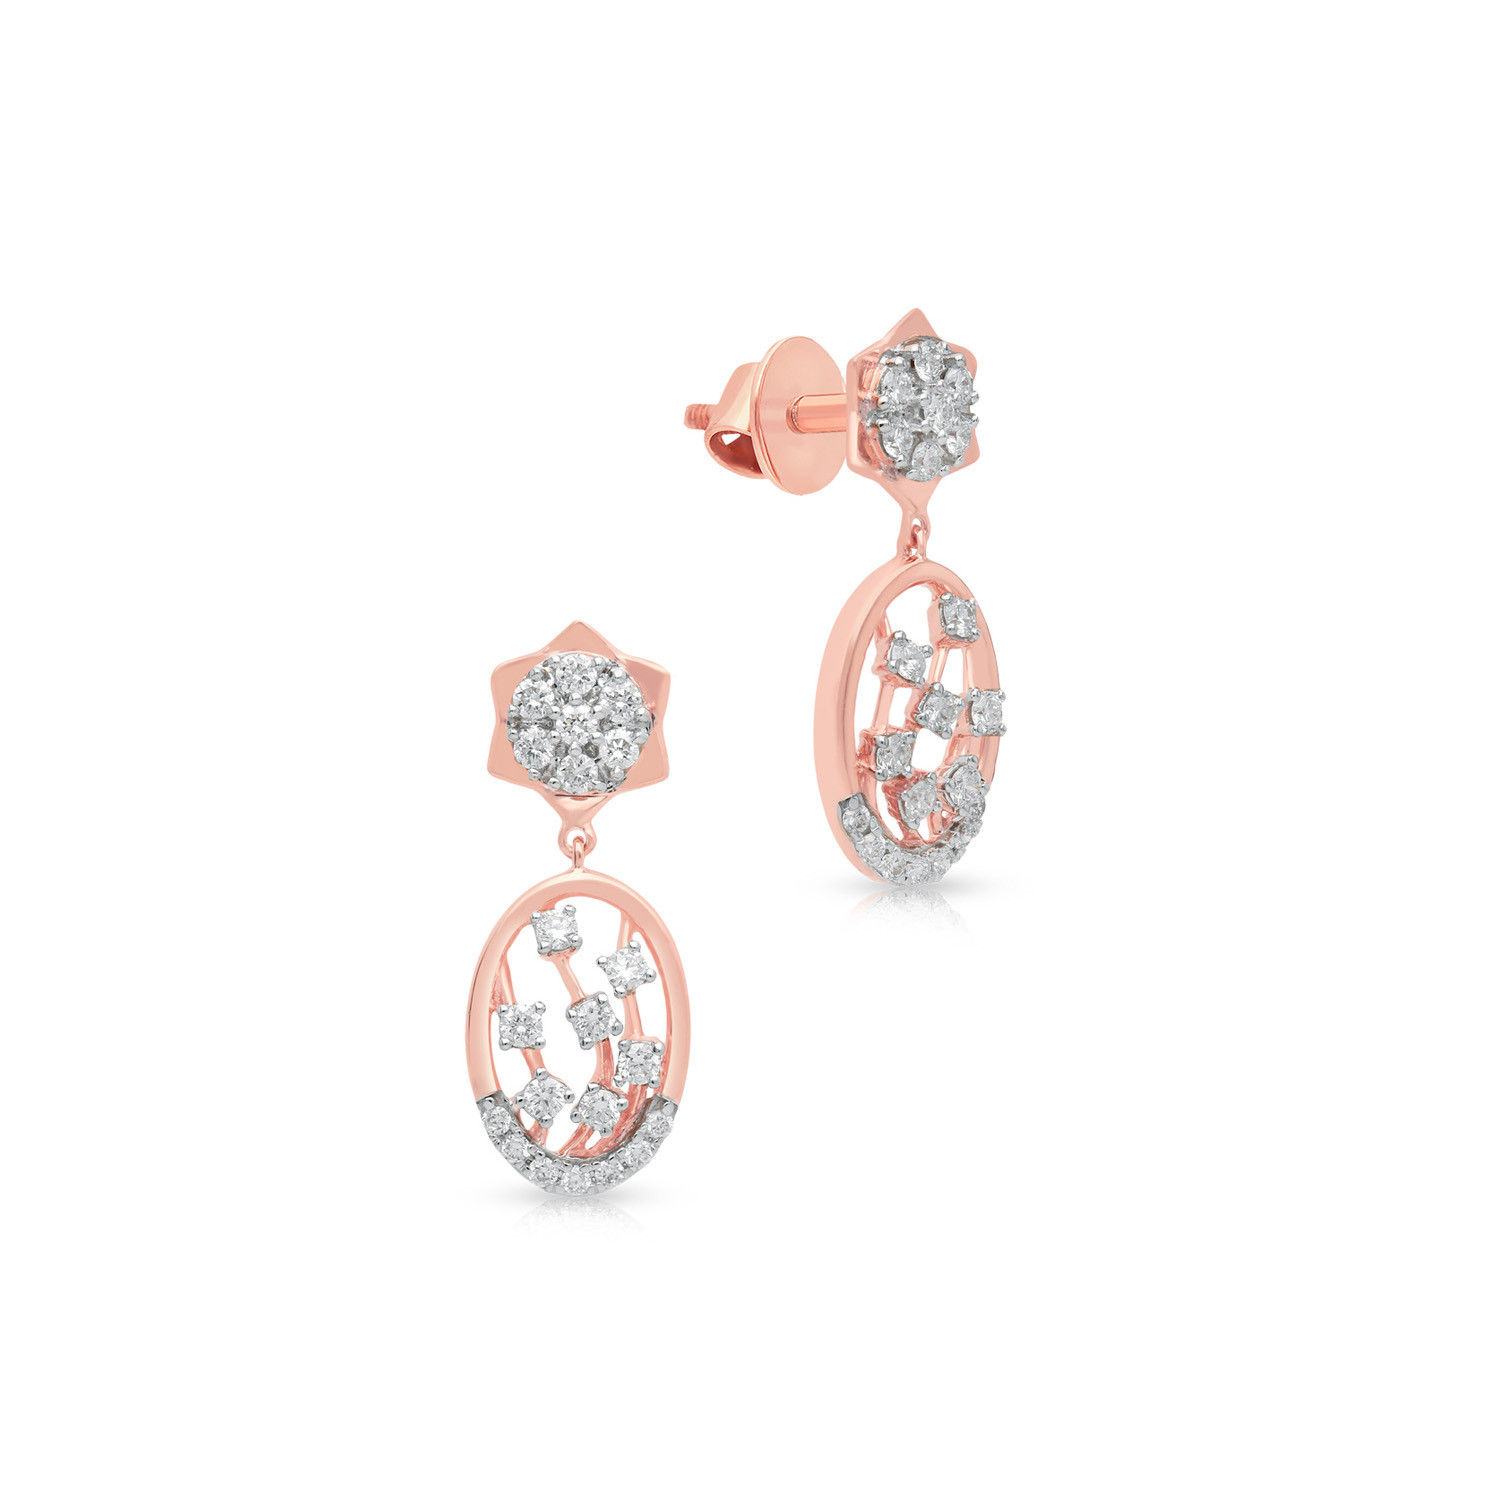 Aggregate more than 72 rose gold diamond earrings australia best